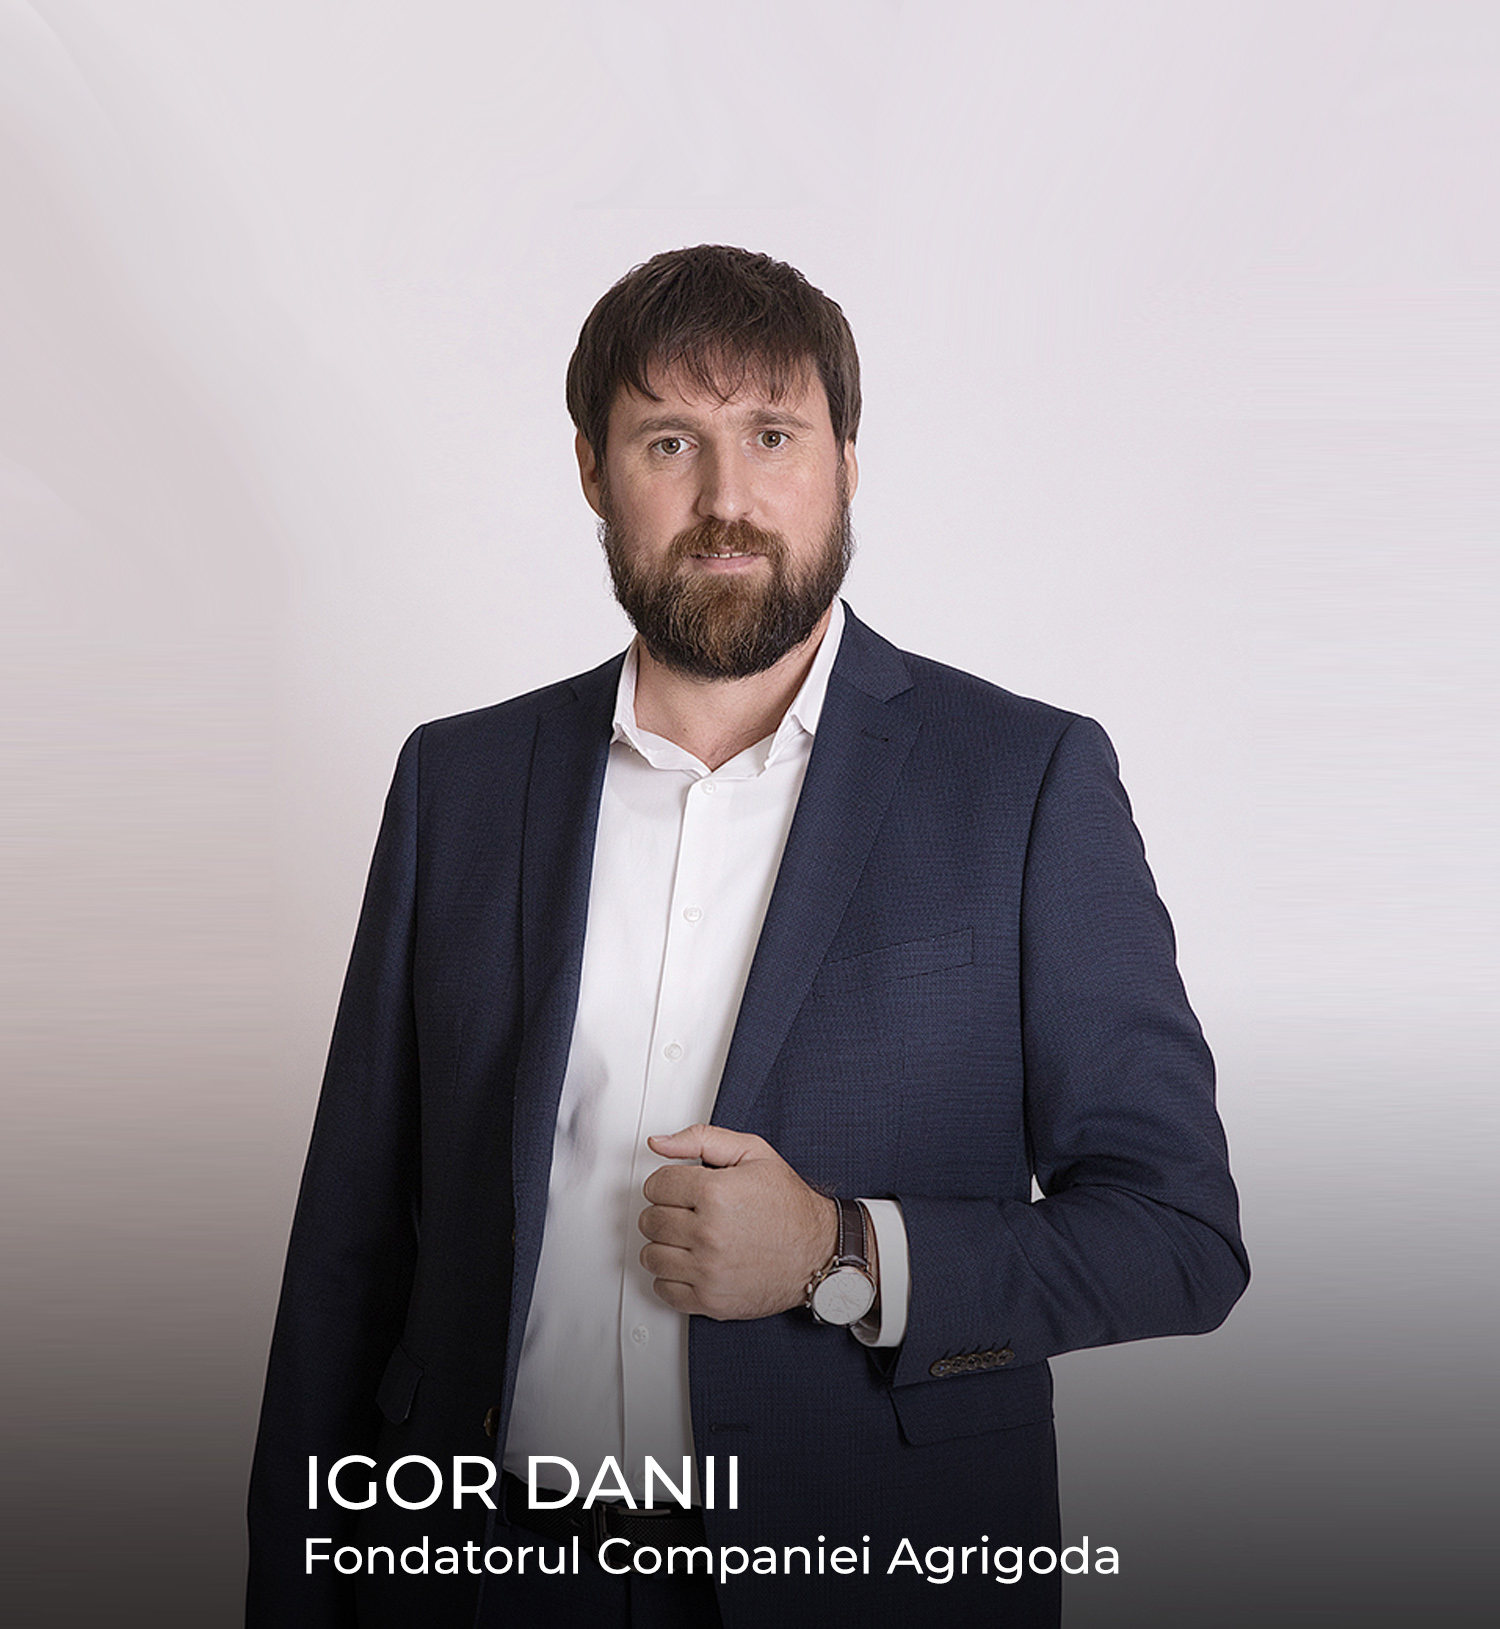 Igor Danii